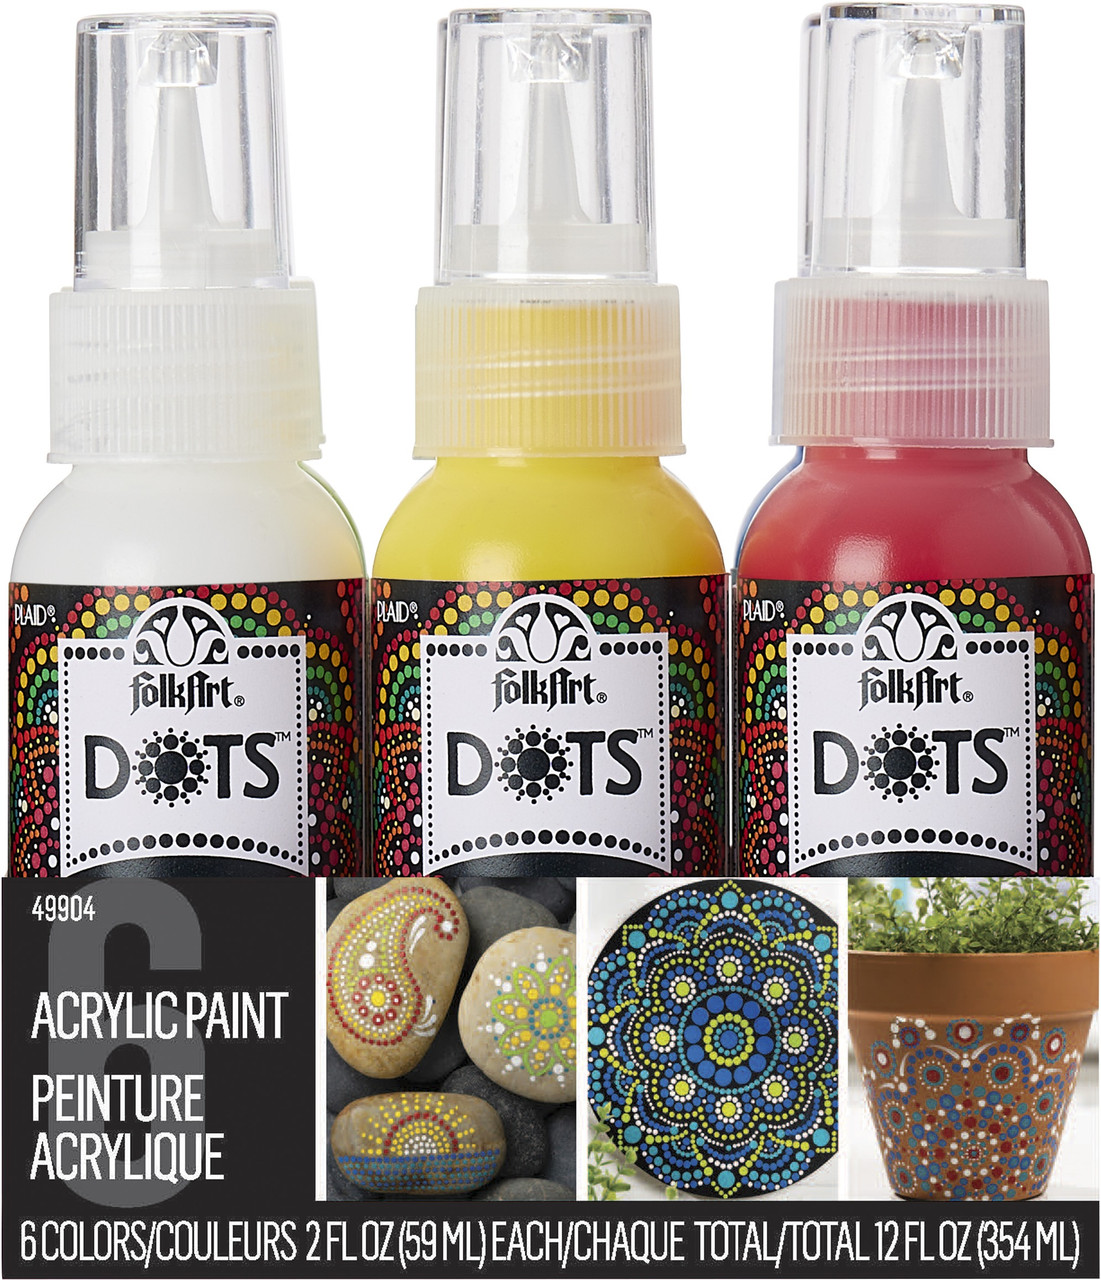 FolkArt Dots Acrylic Paints and Set